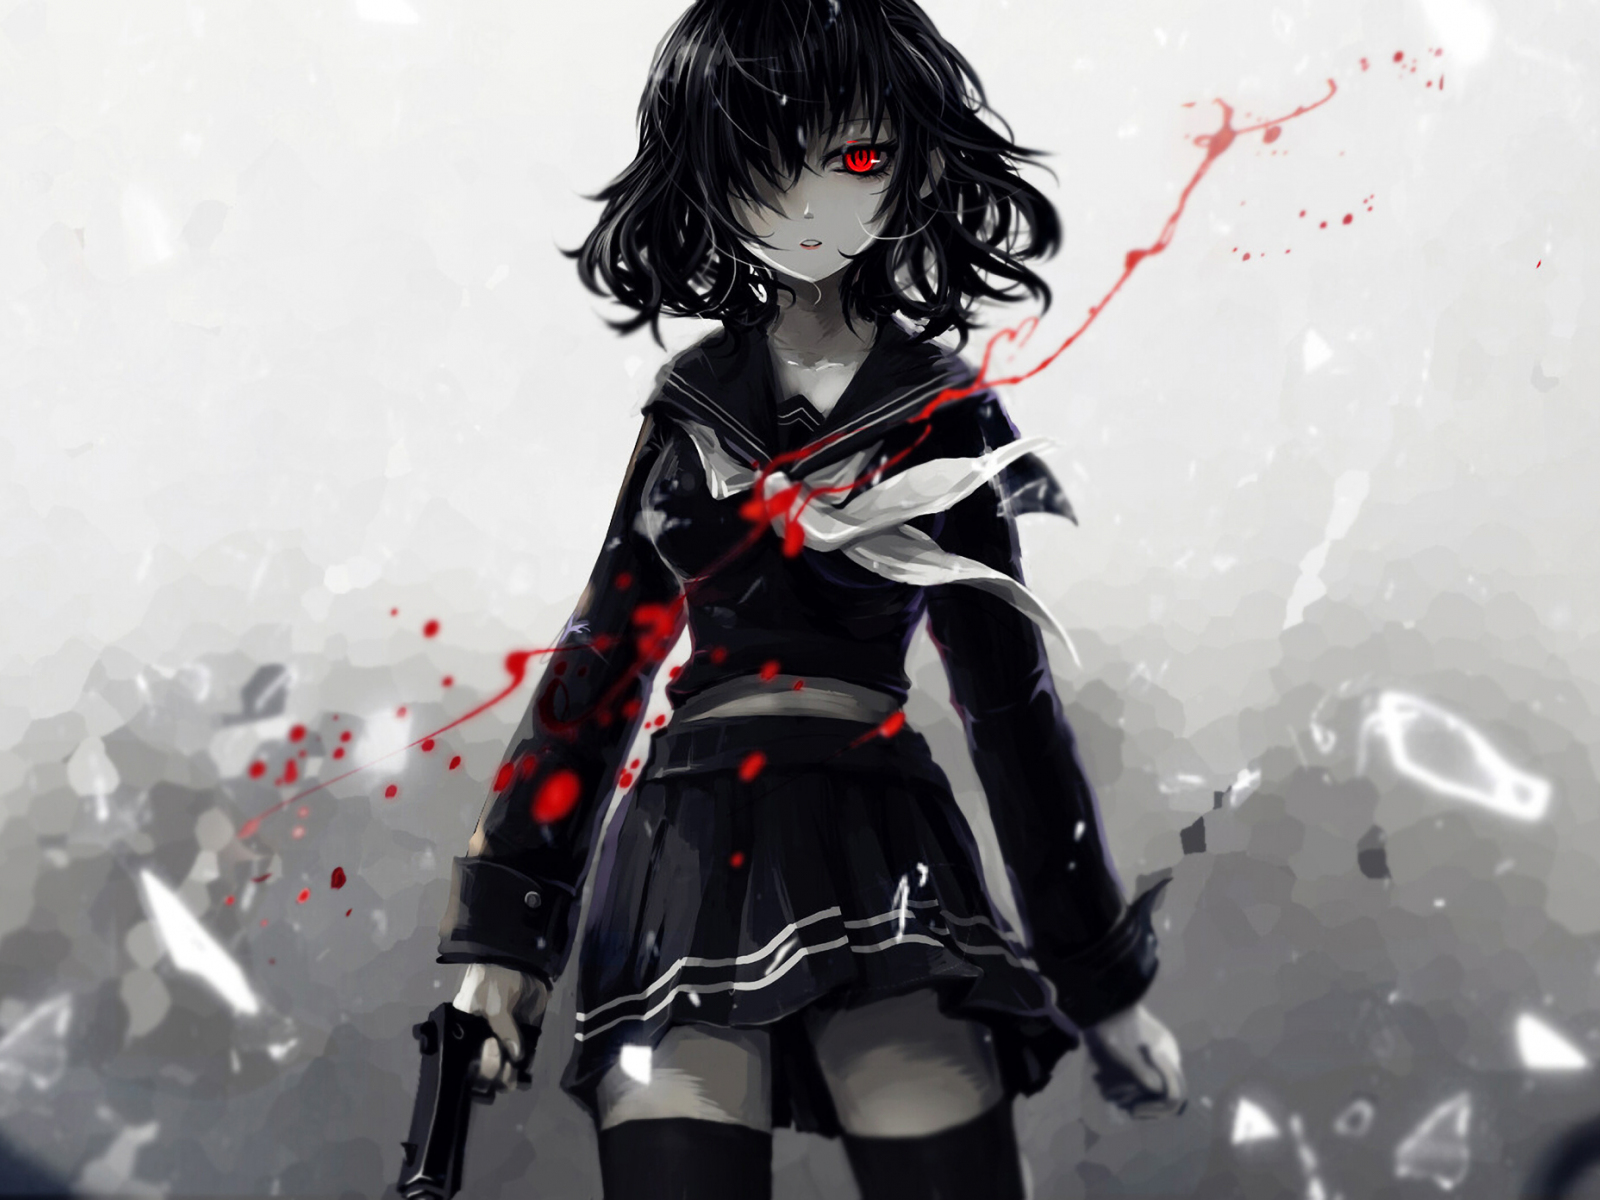 Download 1600x1200 Wallpaper Art Anime Girl With Gun